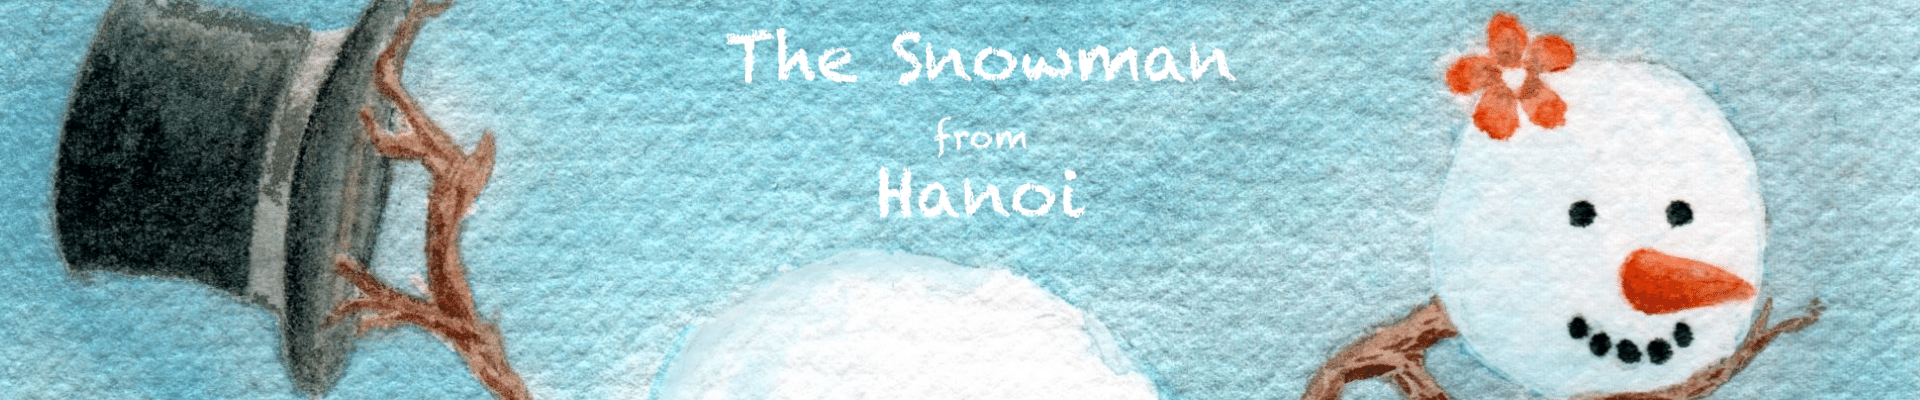 The Snowman from Hanoi